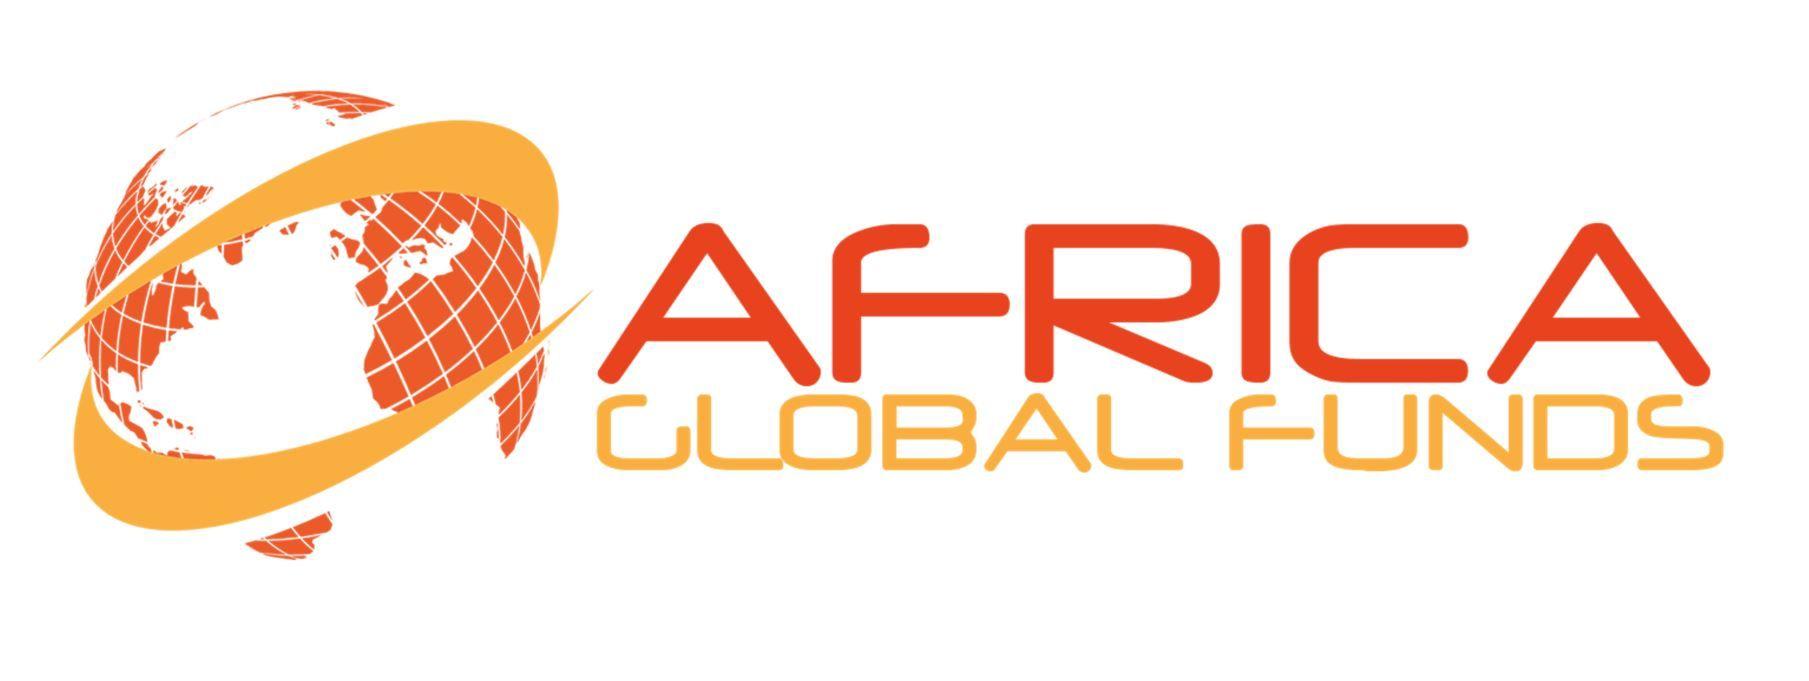 Africa Global Logo - 2018 Media Partner Archives - African Investments